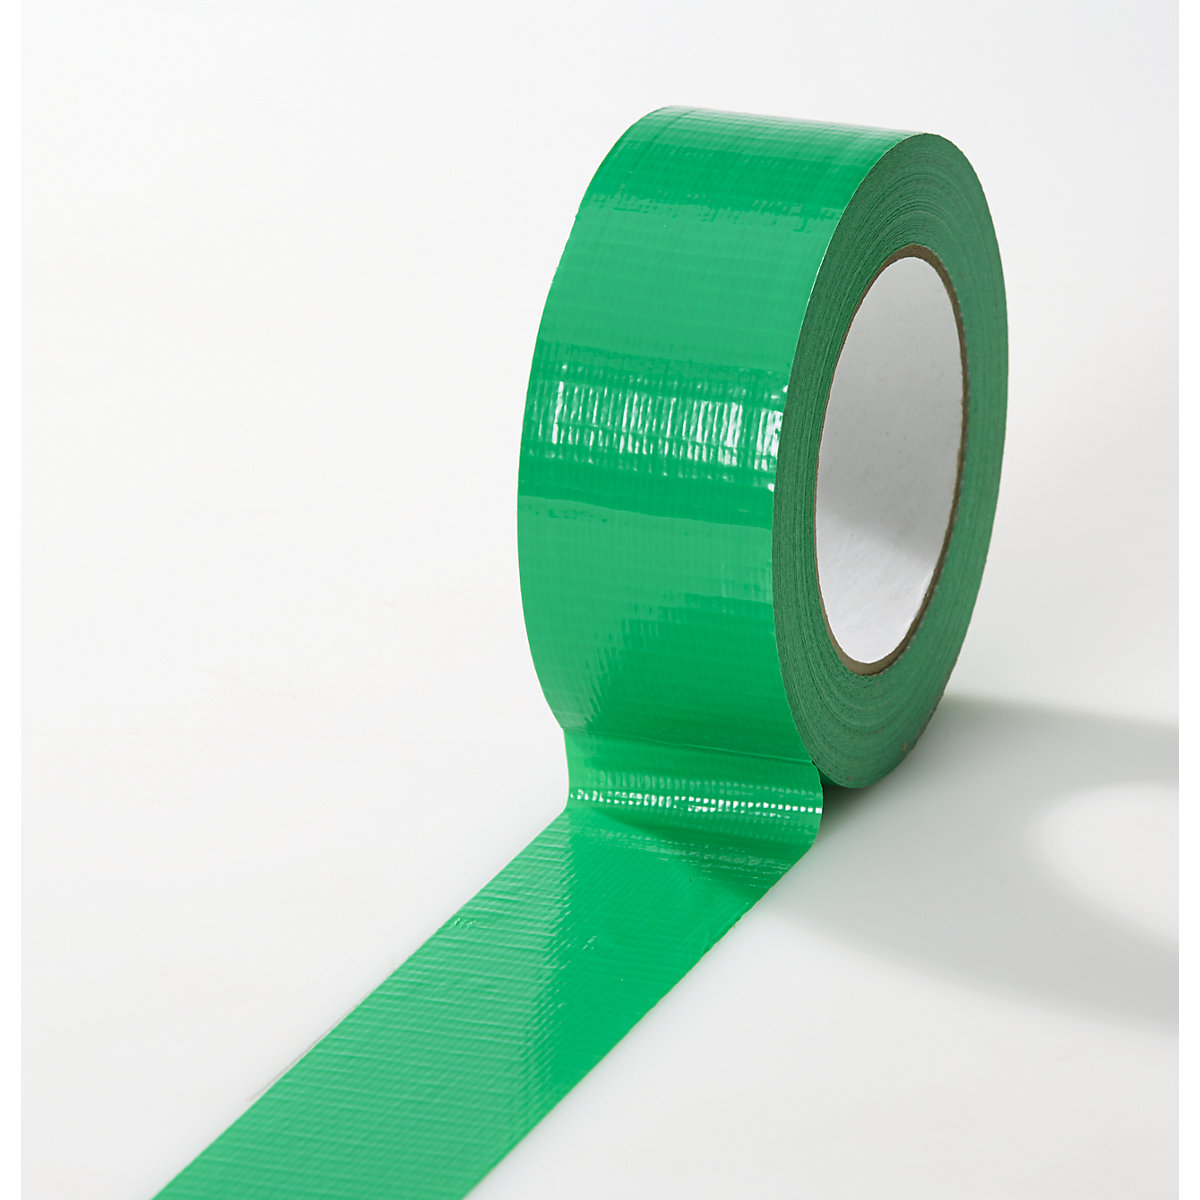 Textielband, in verschillende kleuren, VE = 24 rollen, groen, bandbreedte 38 mm-14